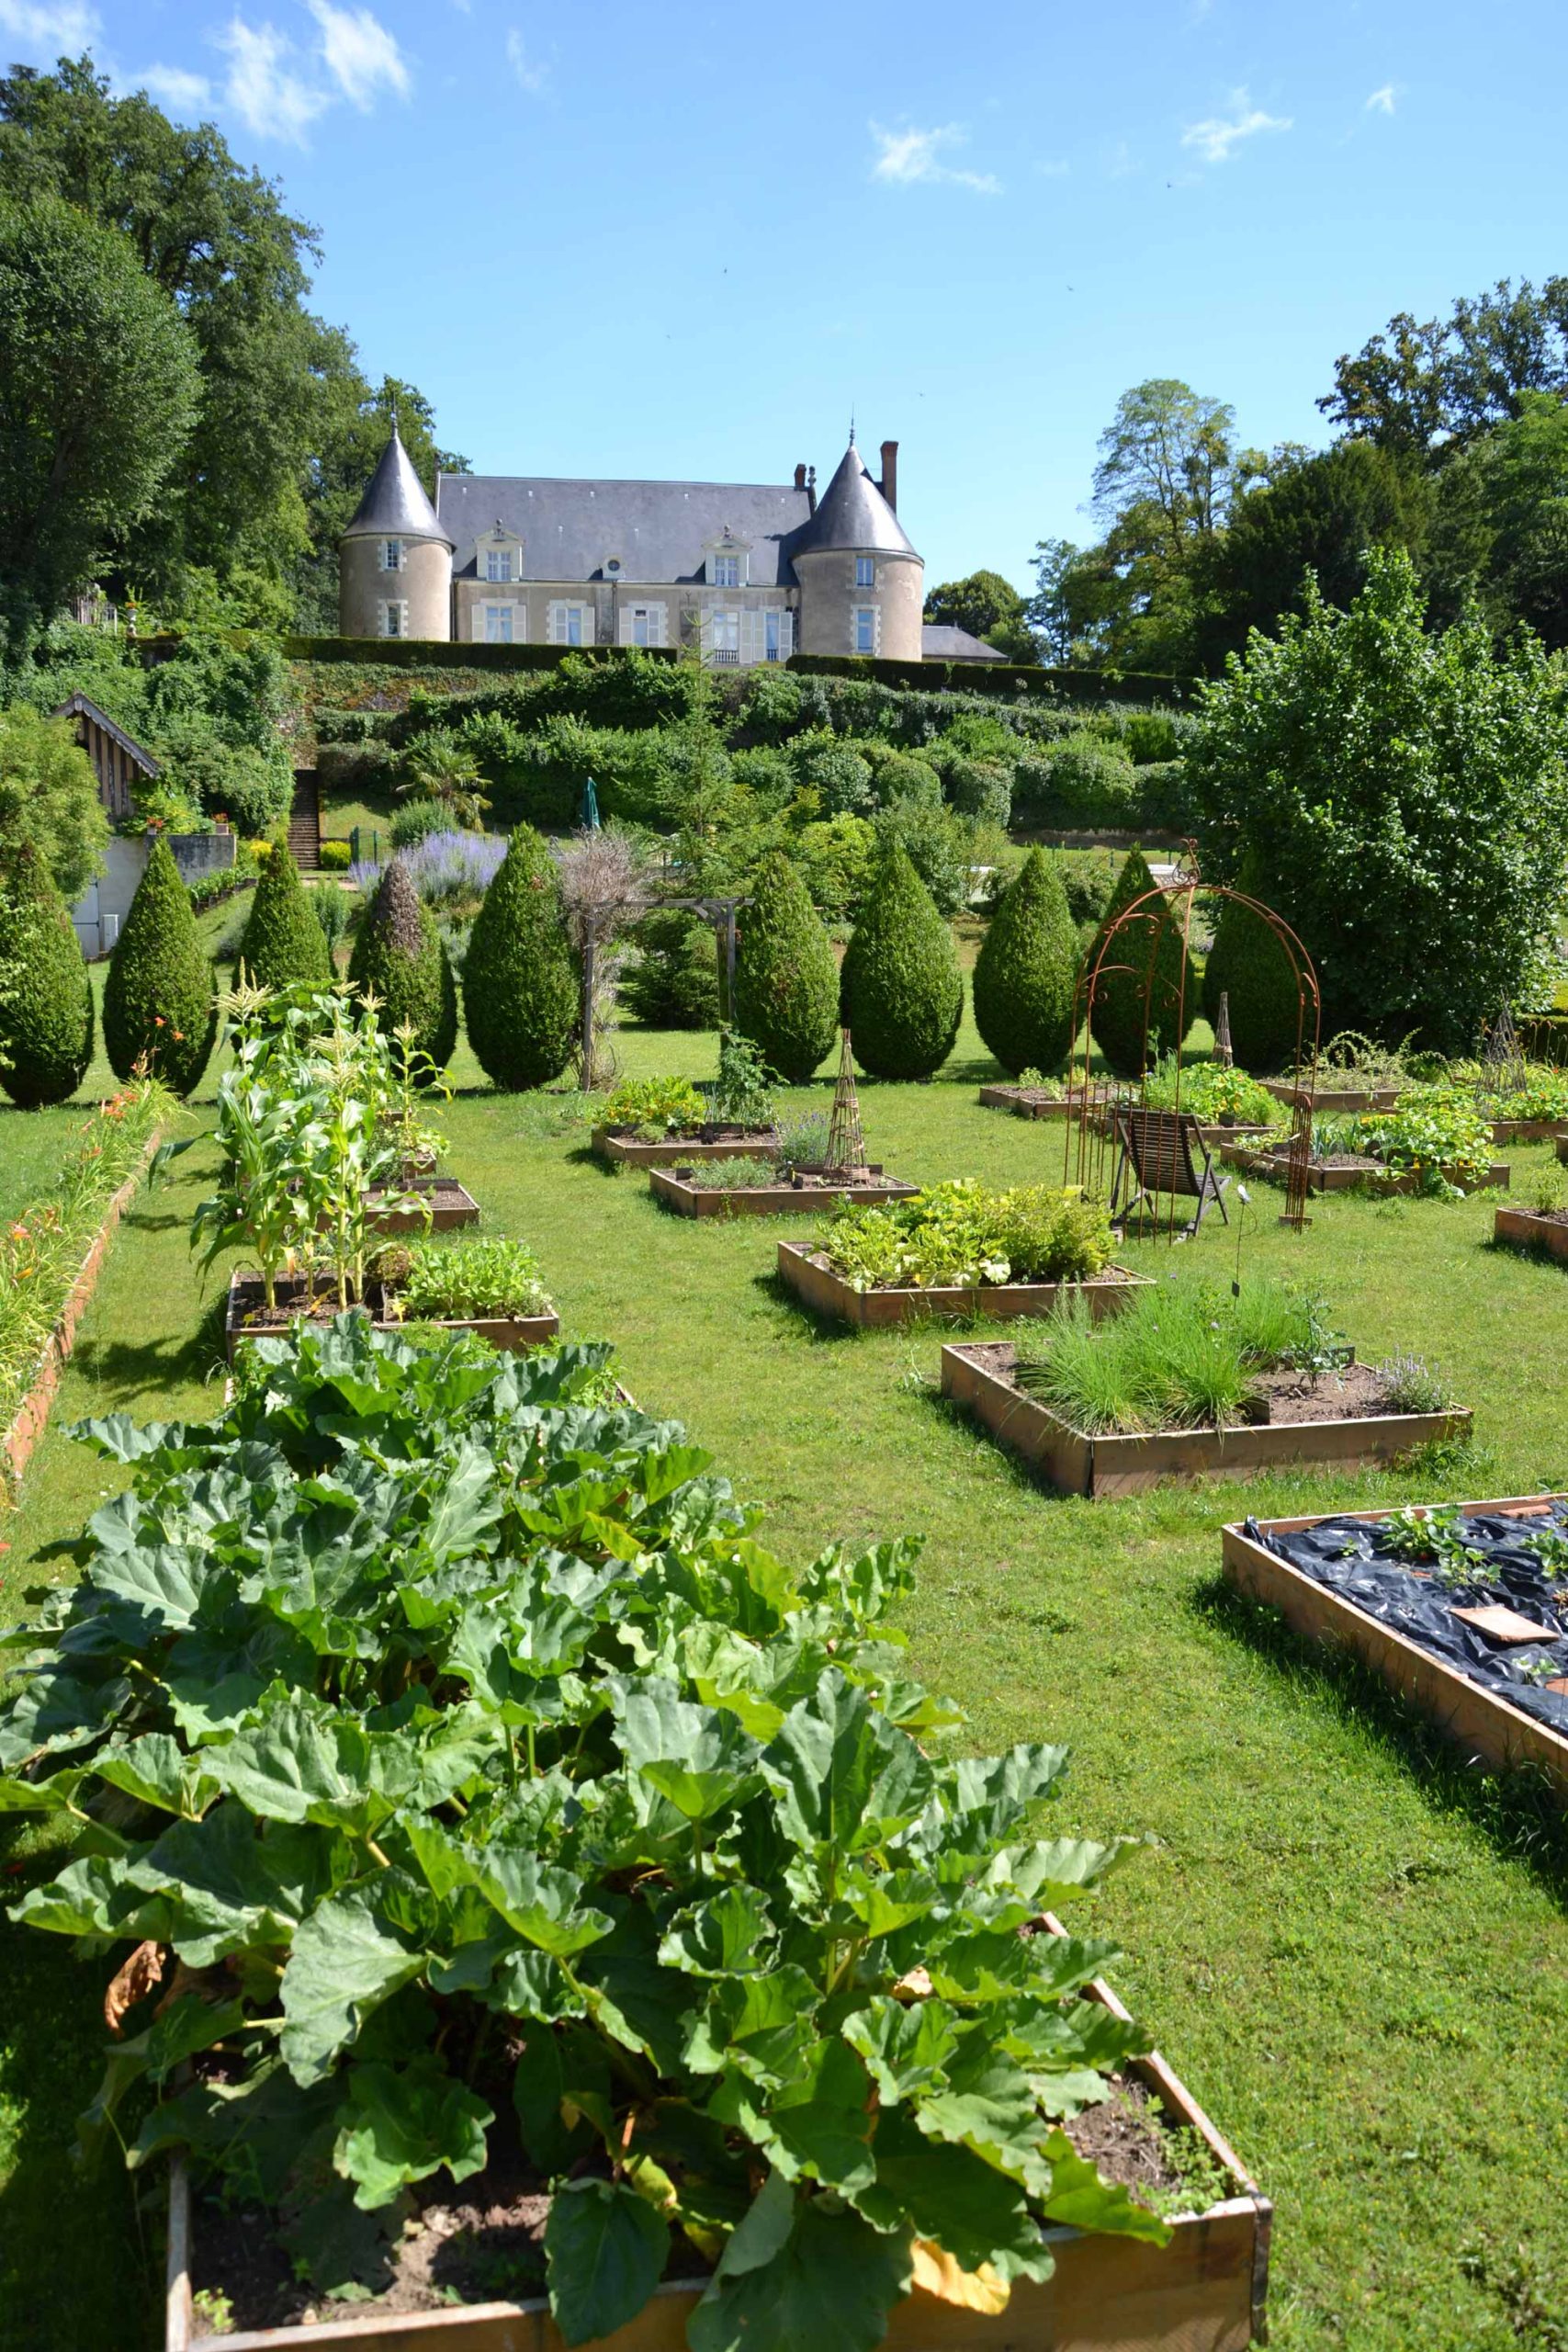 Castle's vegetable garden